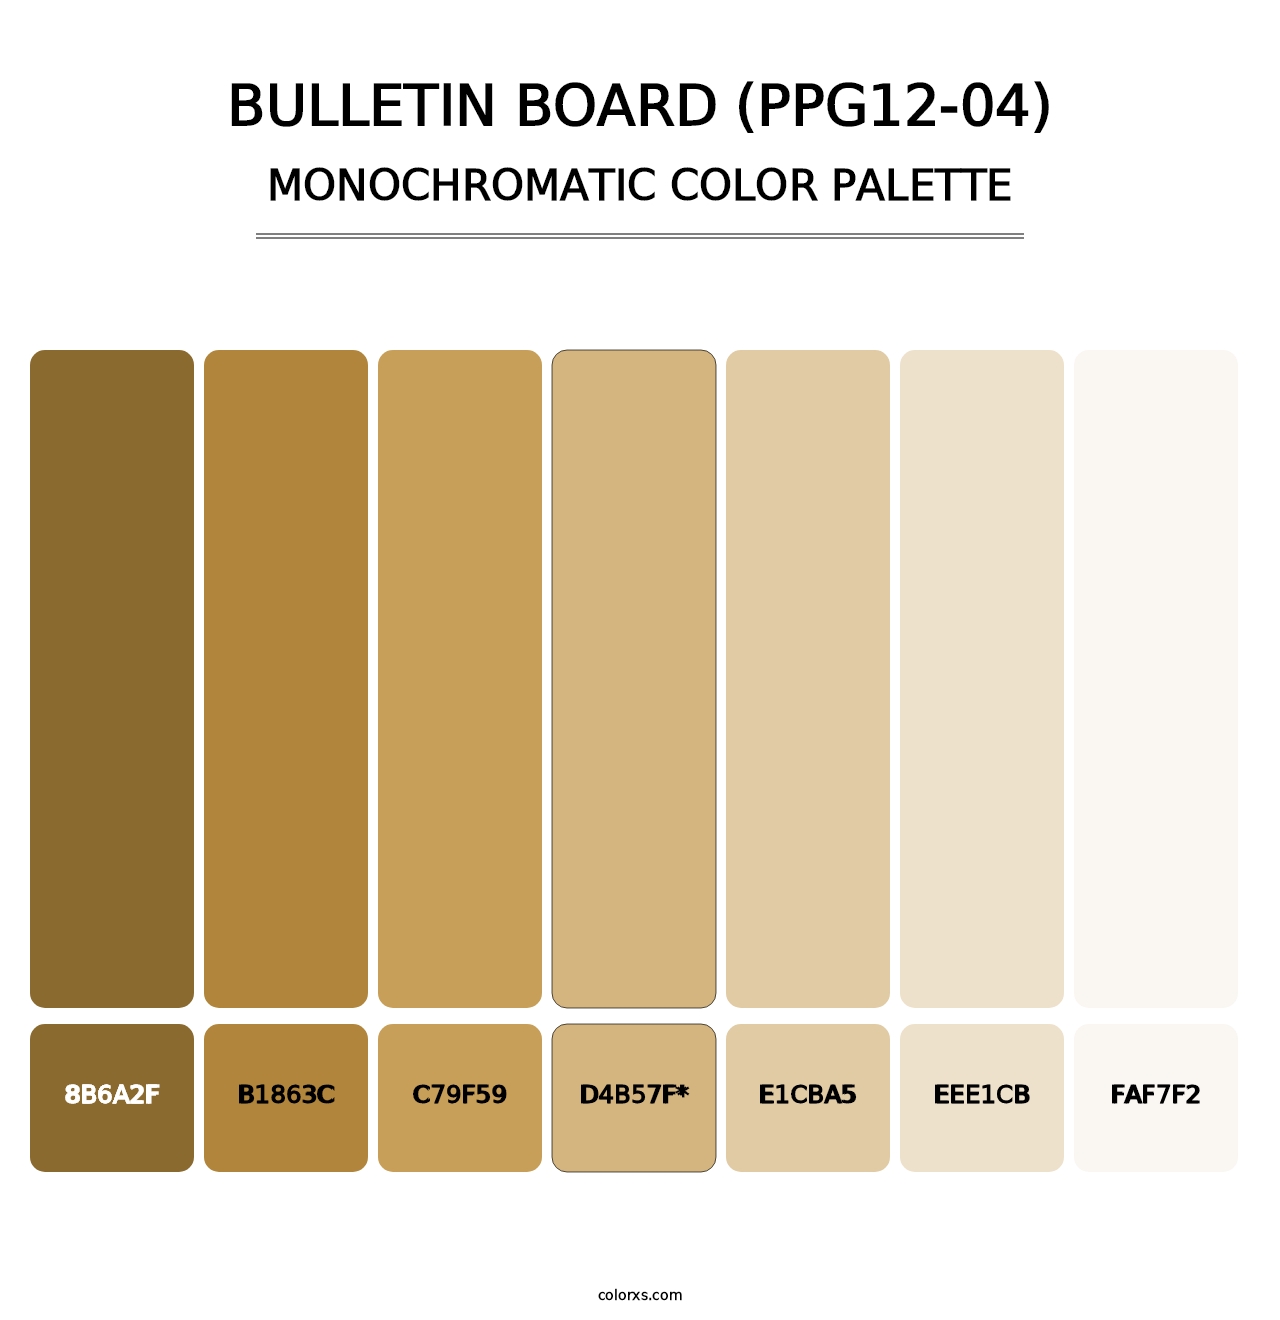 Bulletin Board (PPG12-04) - Monochromatic Color Palette